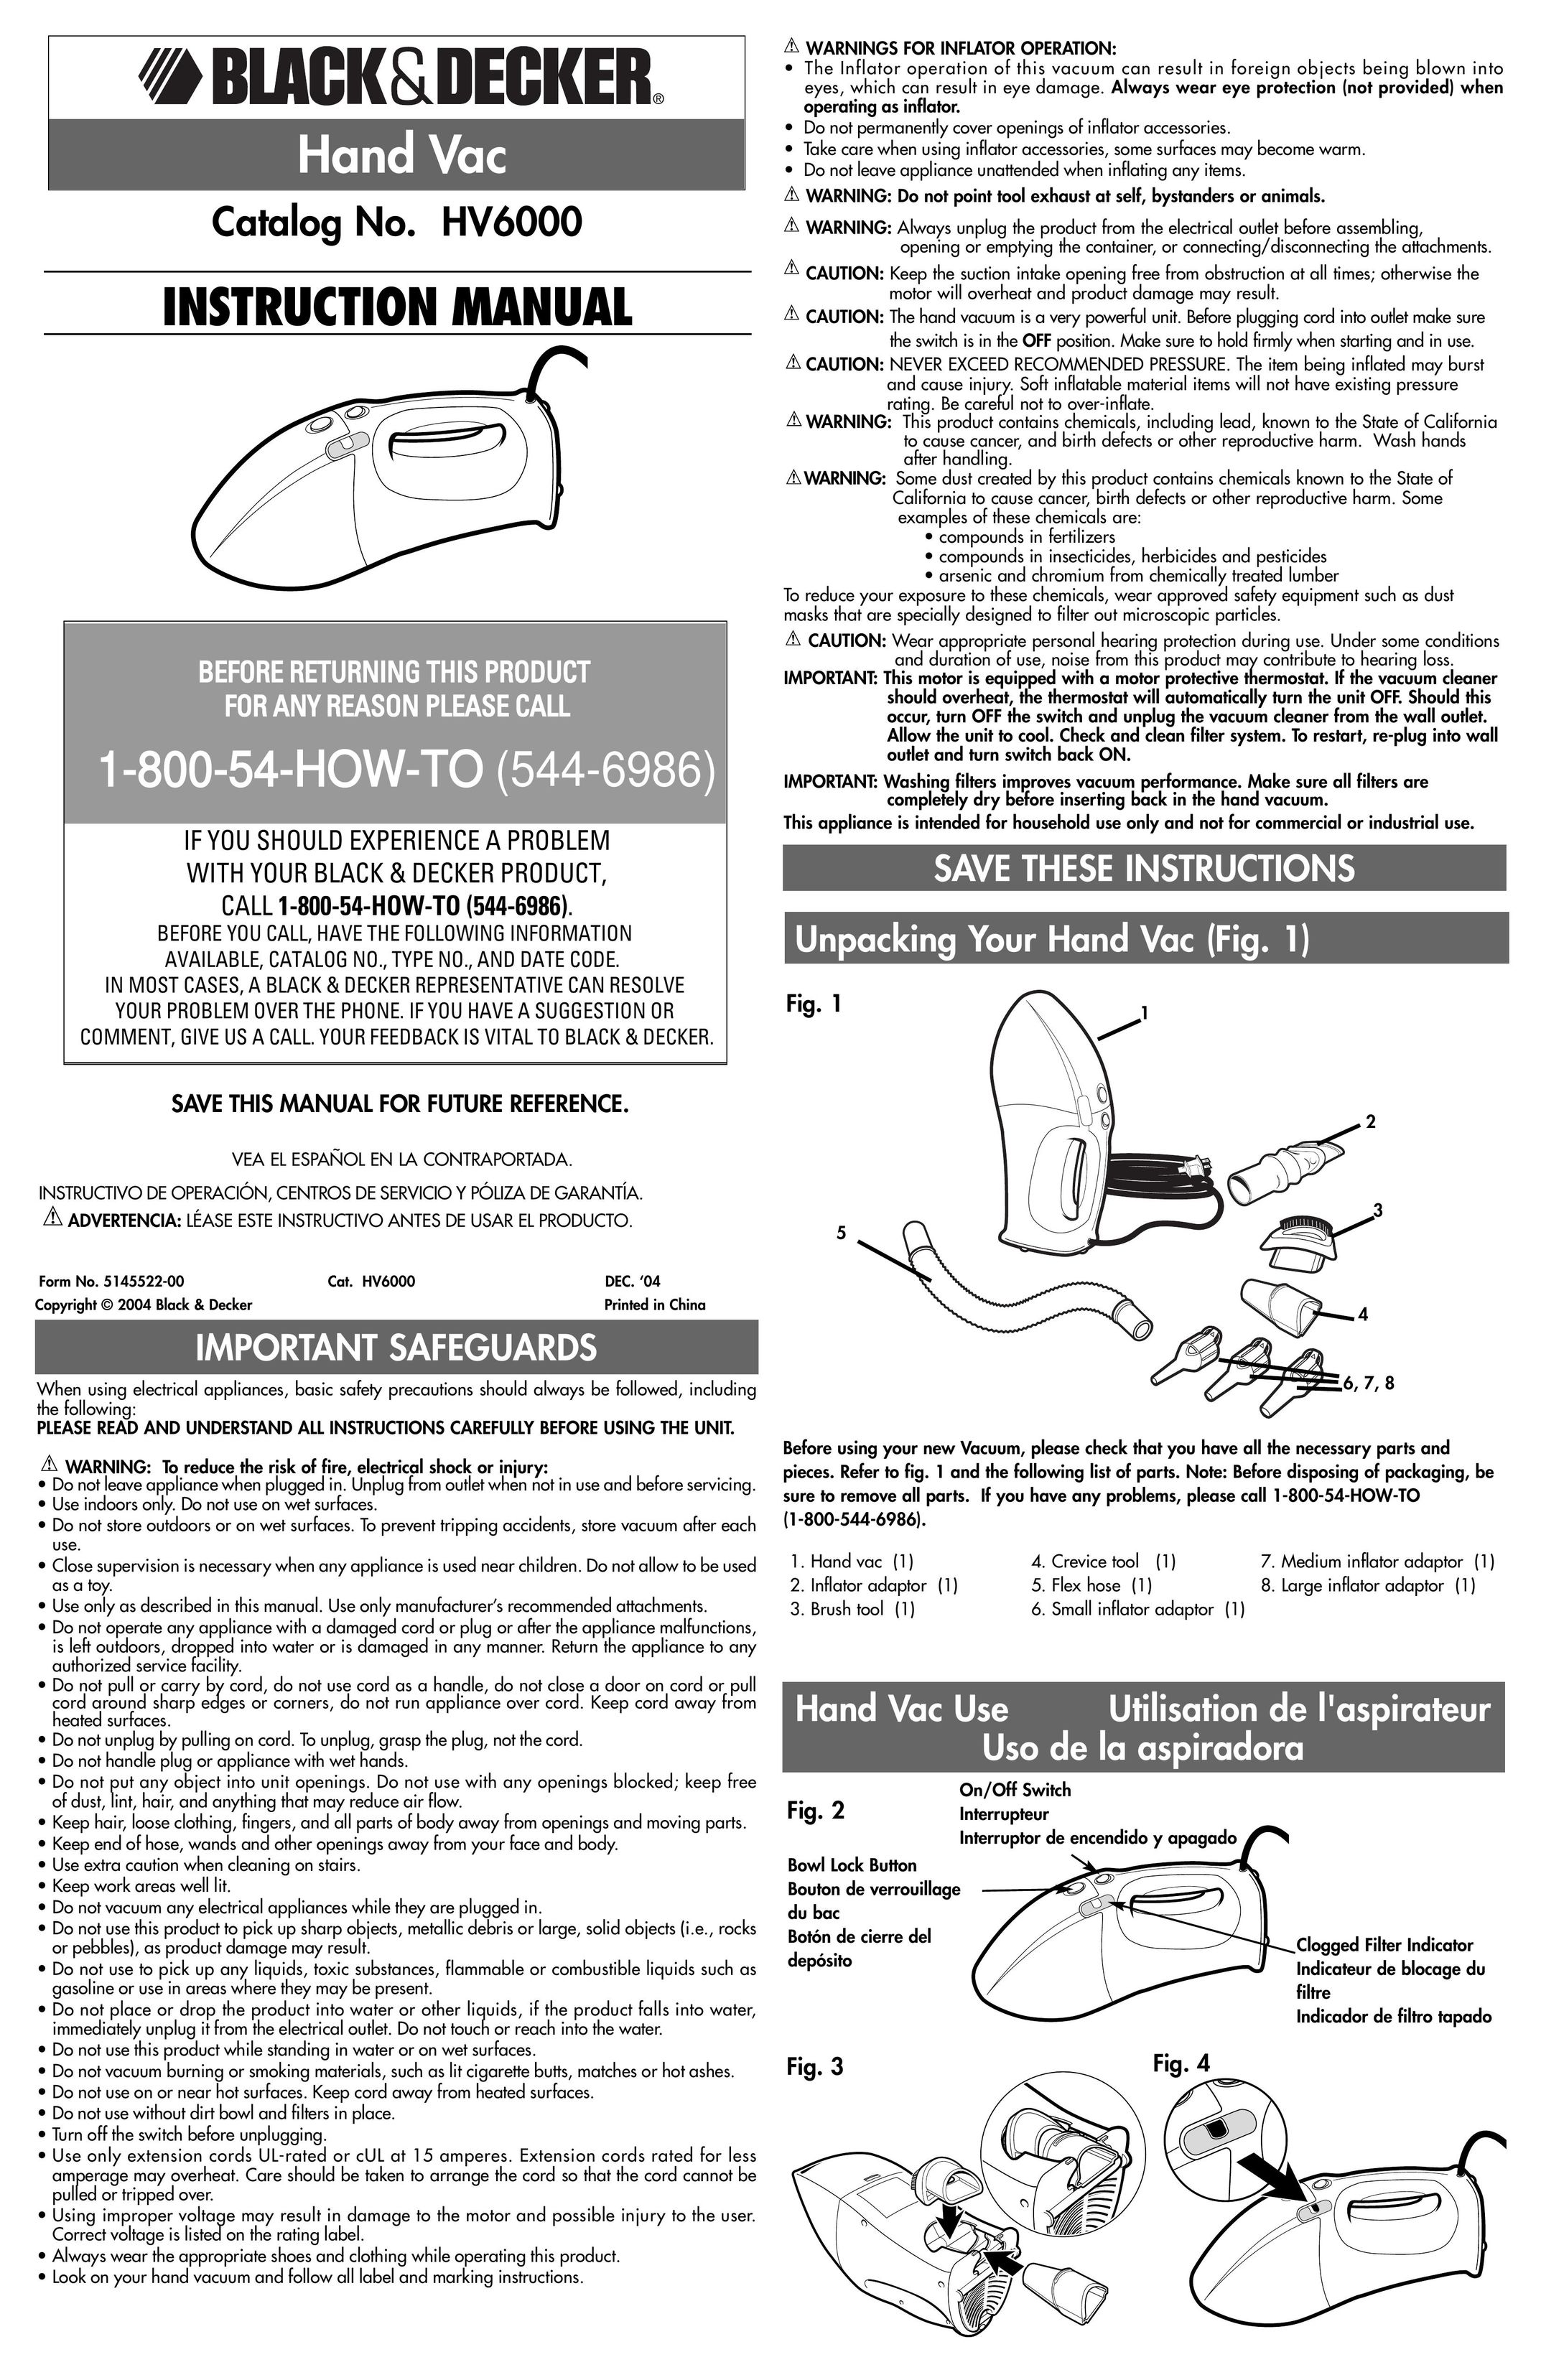 Black & Decker 5145522-00 Vacuum Cleaner User Manual